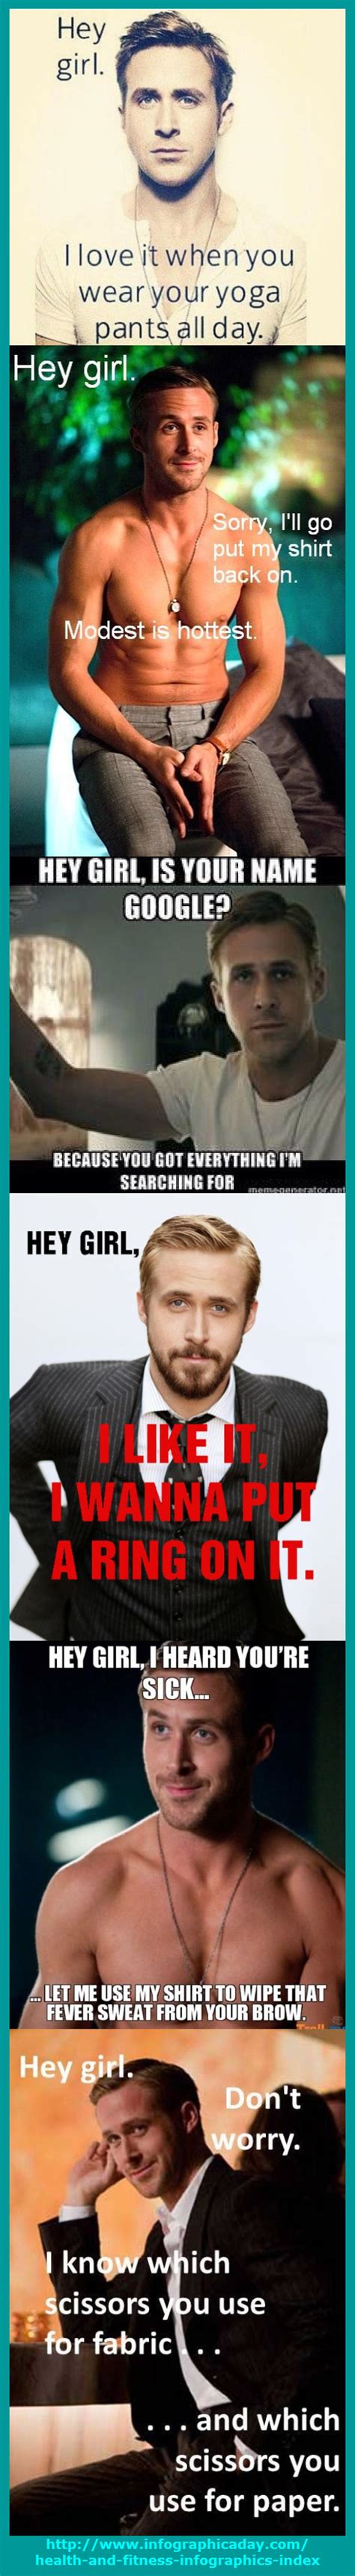 Hey Girl Via Ryan Gosling Meme Infographic A Day